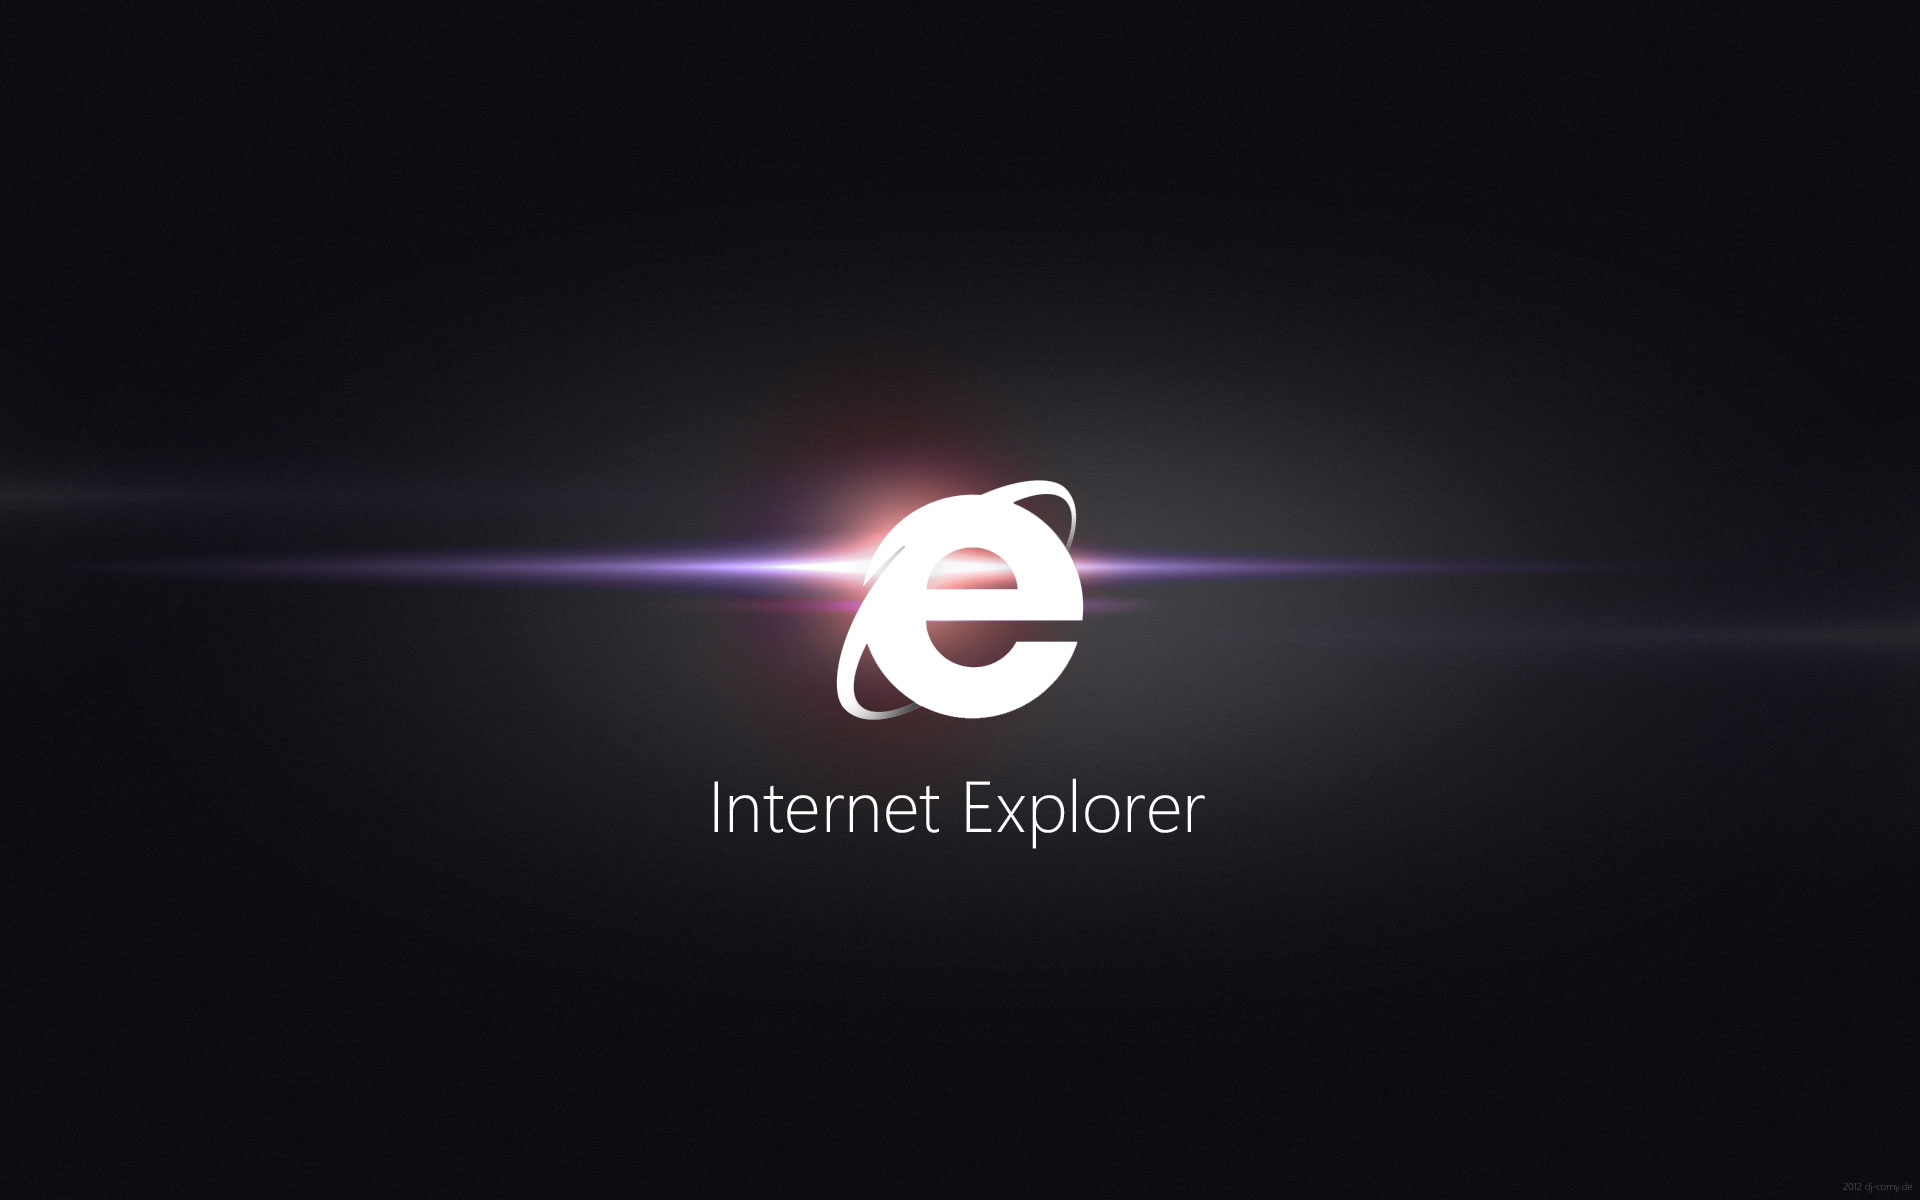 internet explorer 11 free download